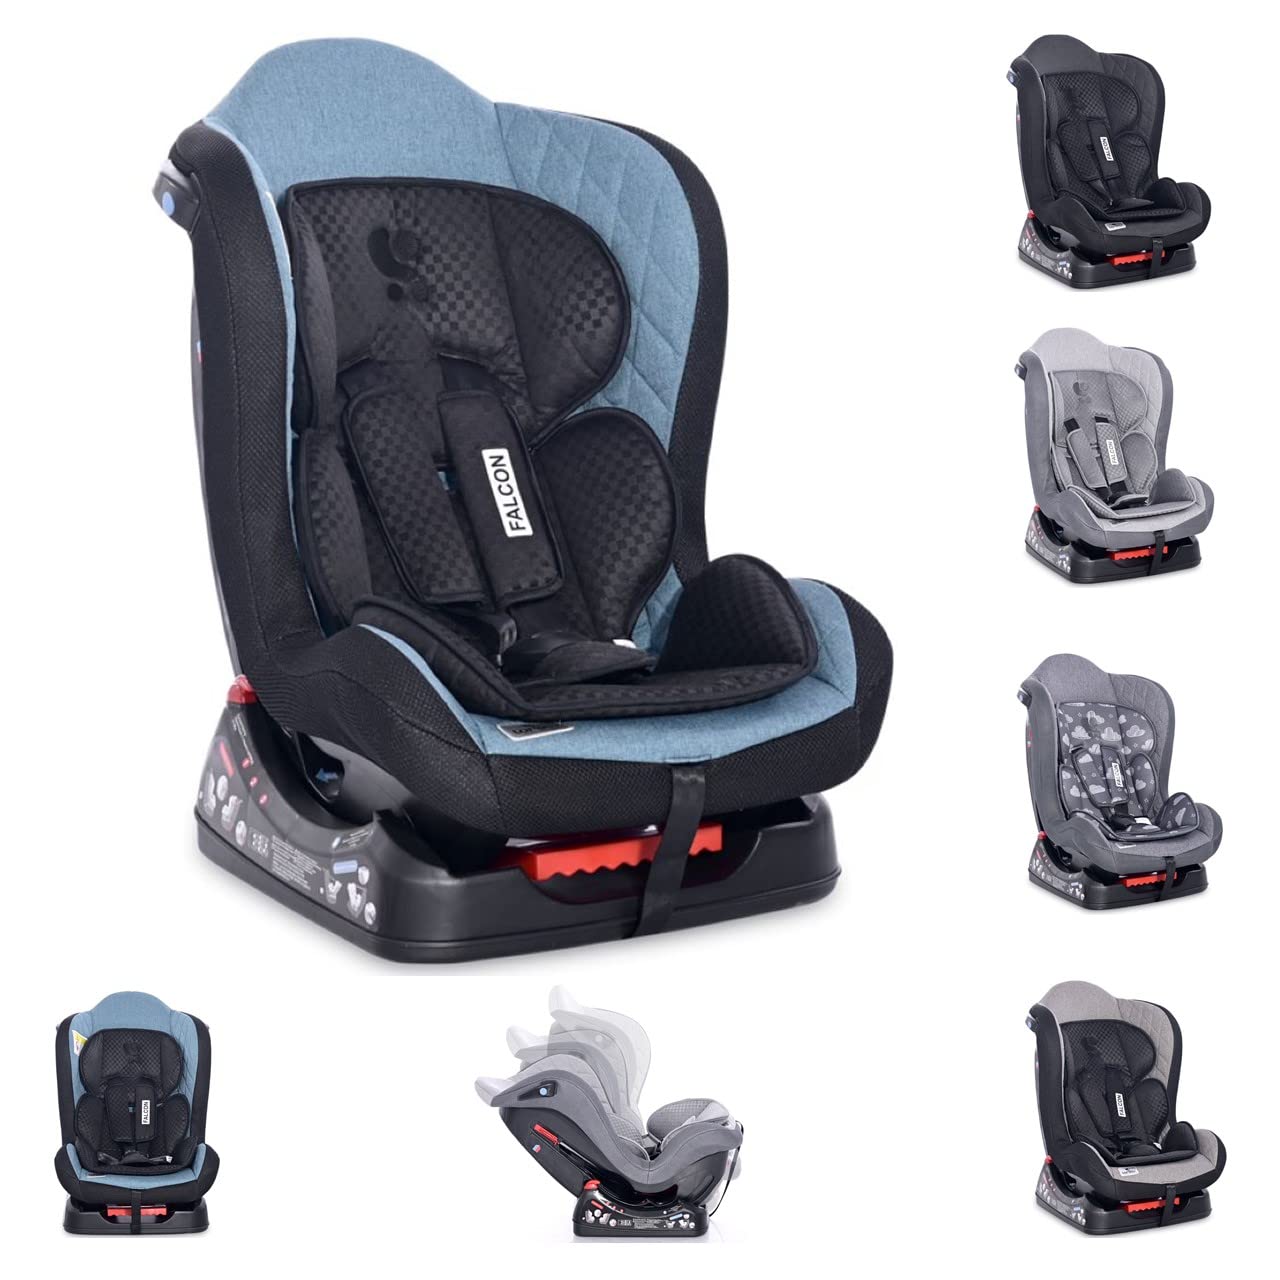 Lorelli Falcon Child Seat Group 0+/1 (0-18 kg) Reboard Adjustable Backrest, Light Blue